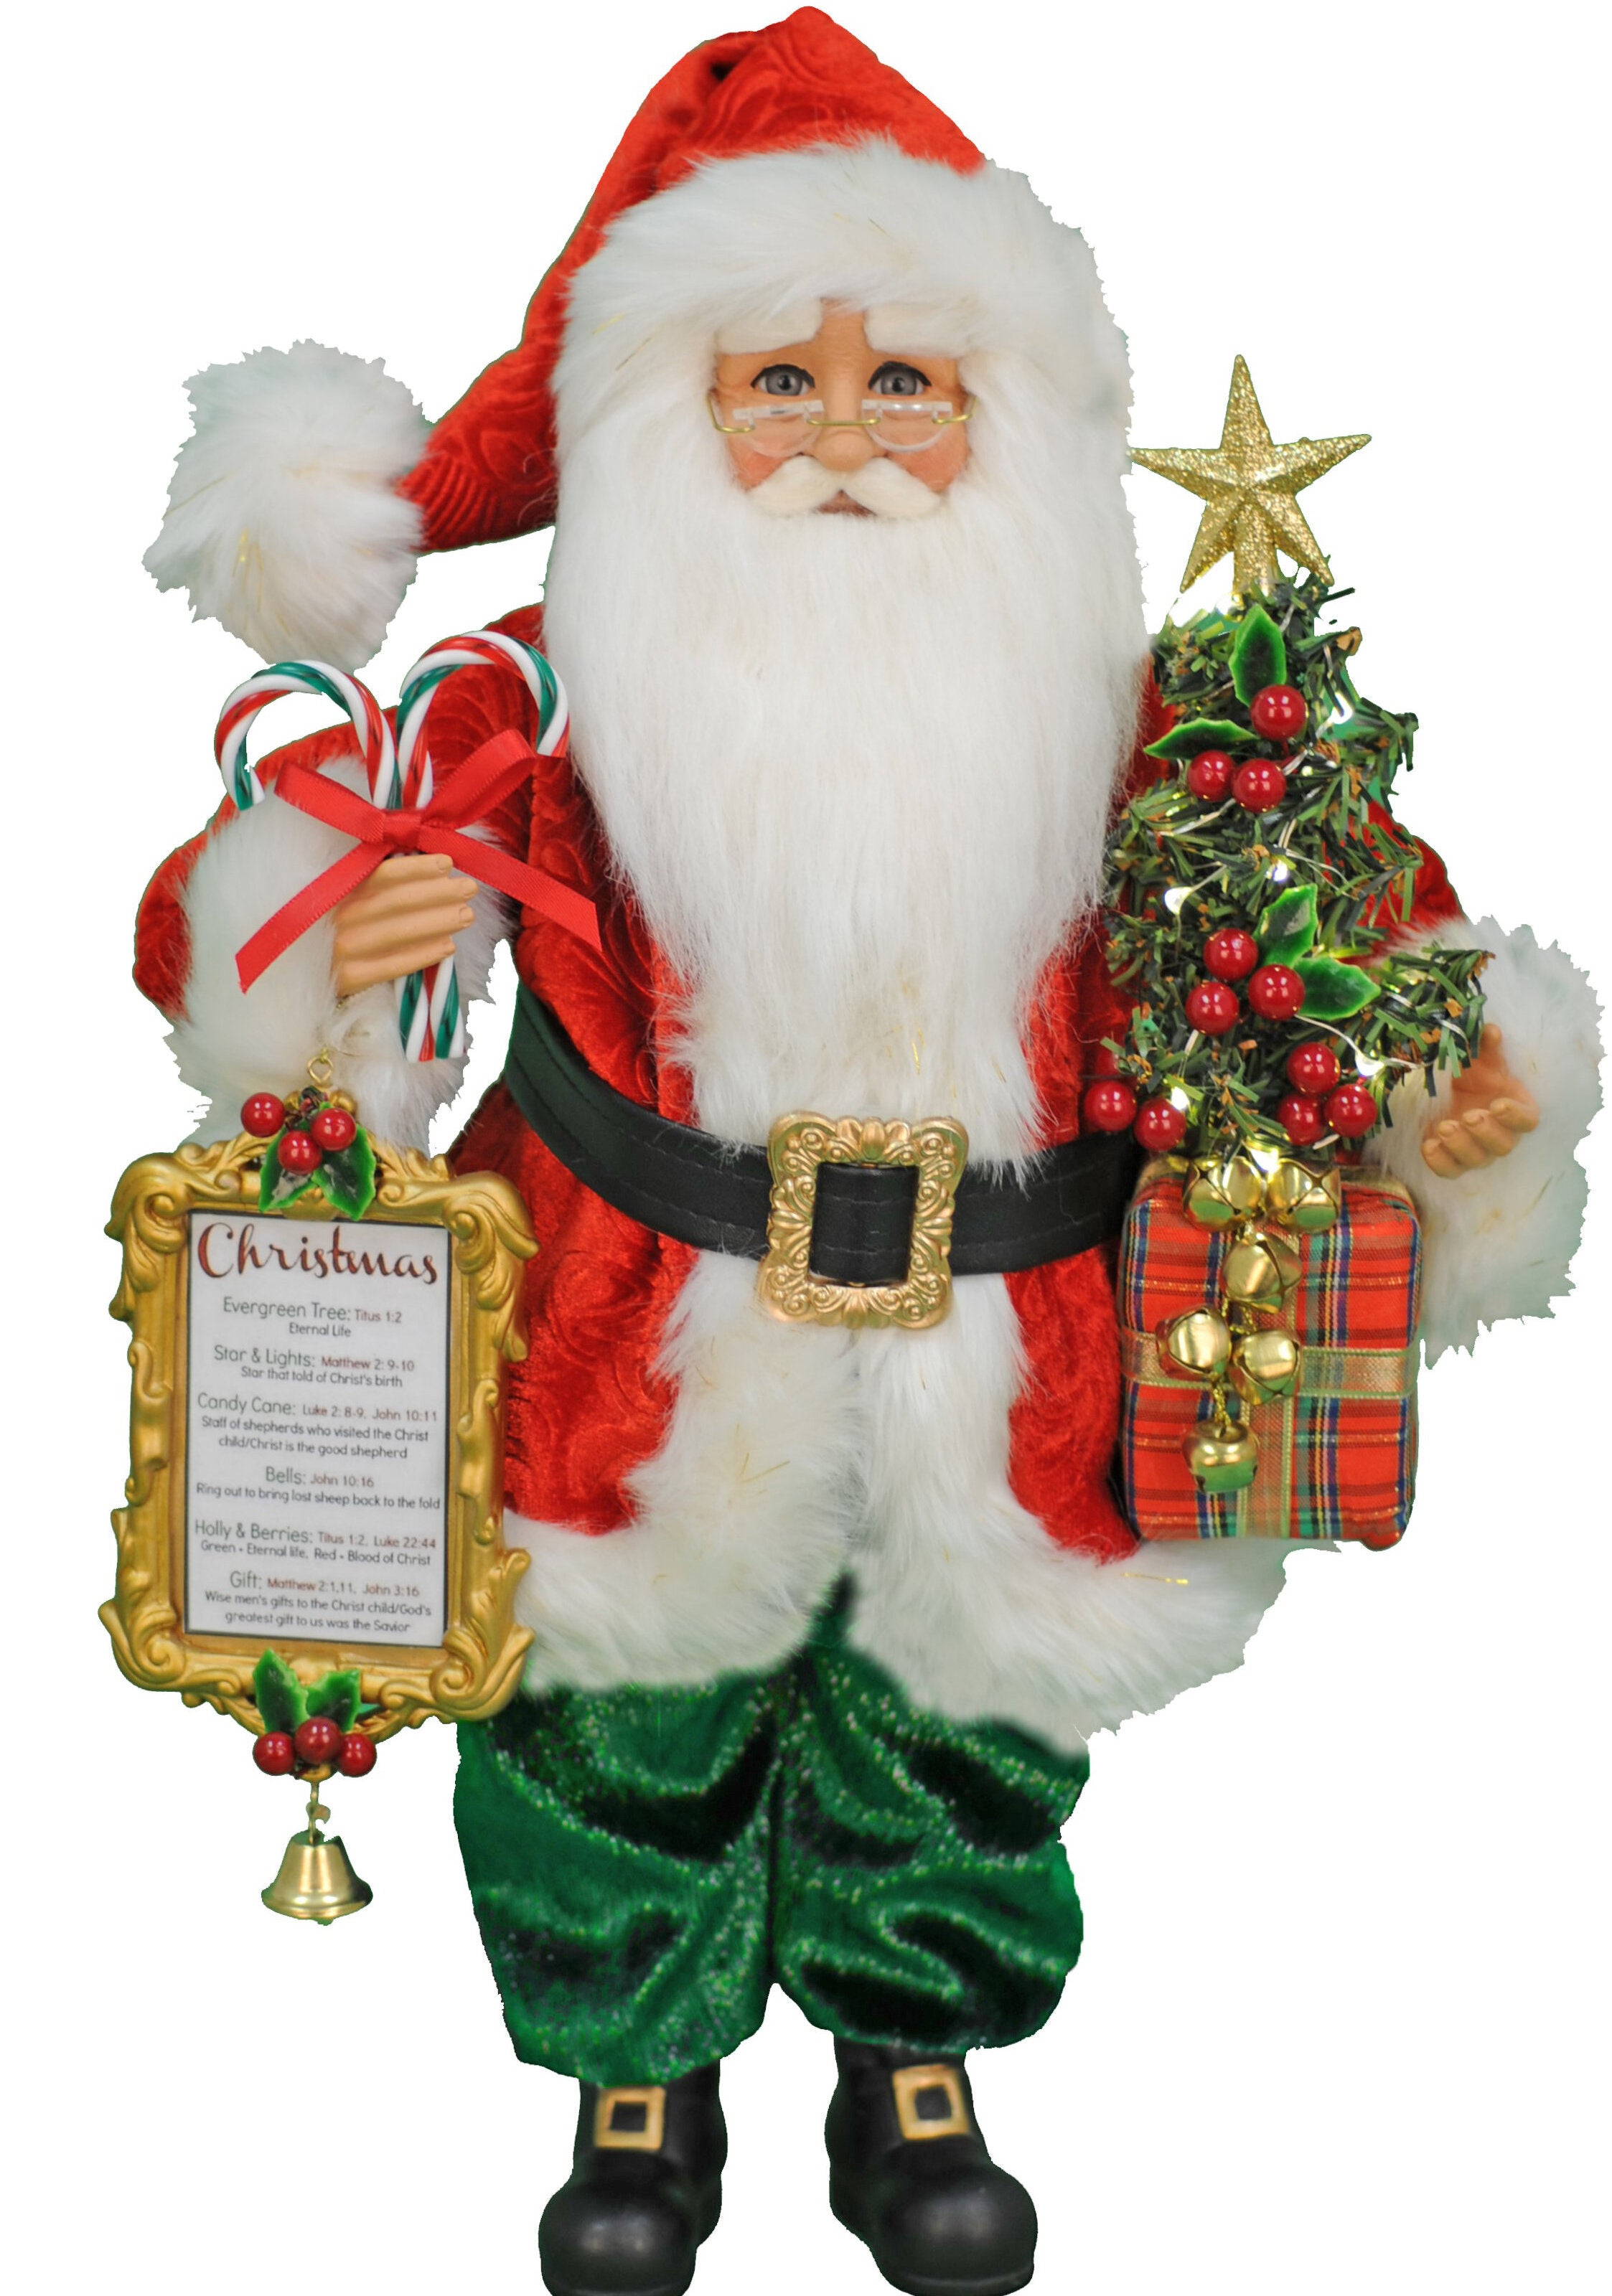 Traditions of Christmas Santa bby Karen Didion